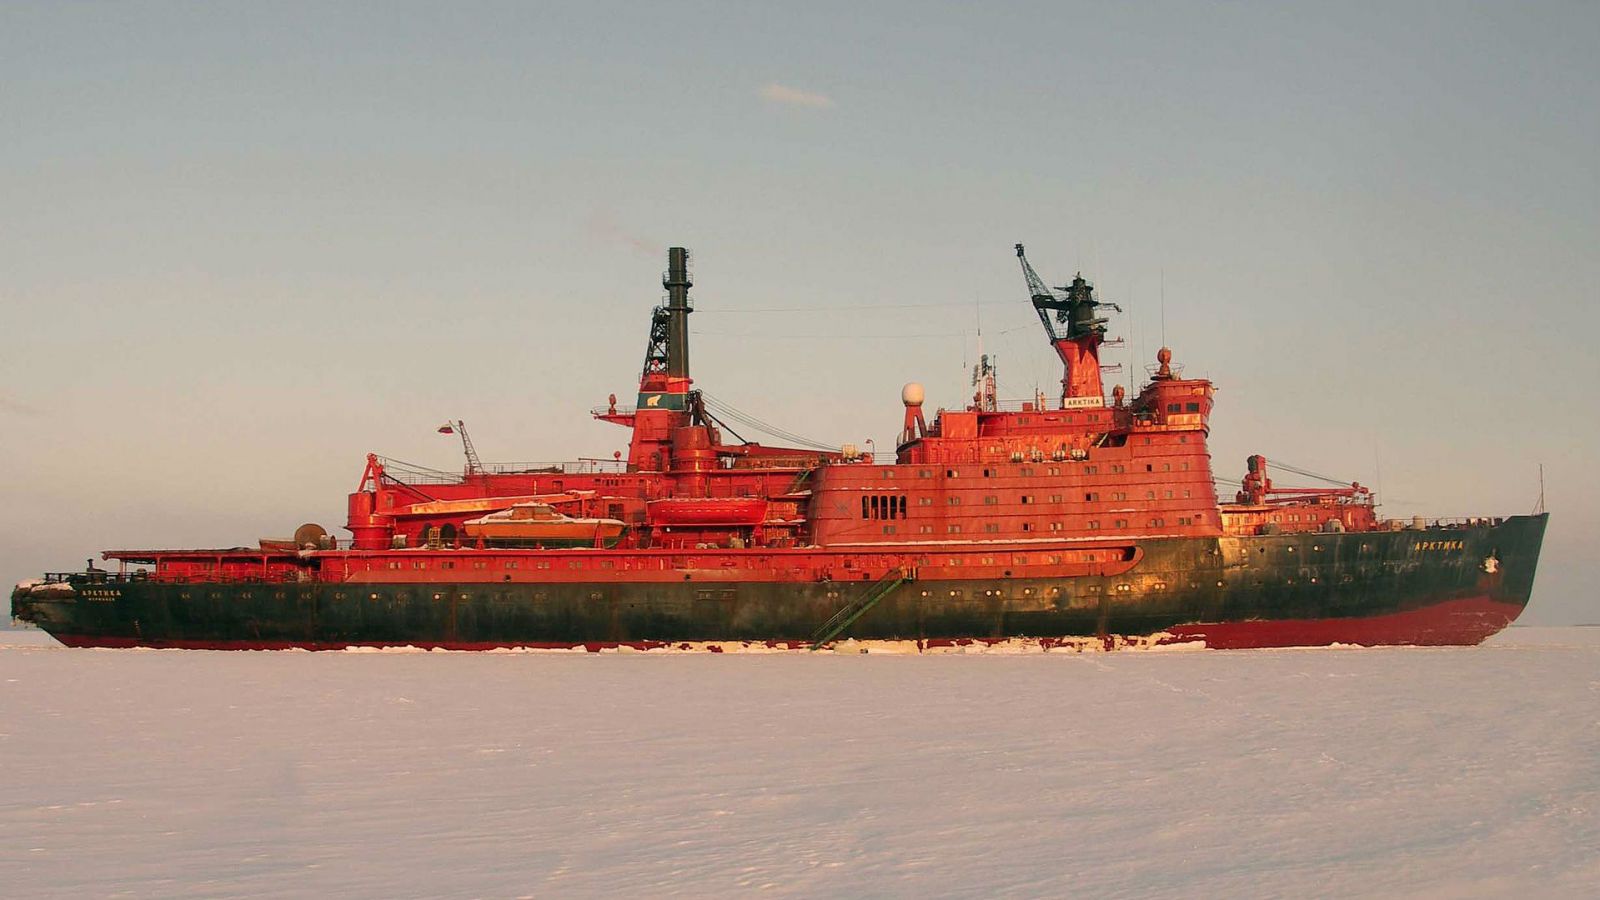 Arktika-class icebreaker